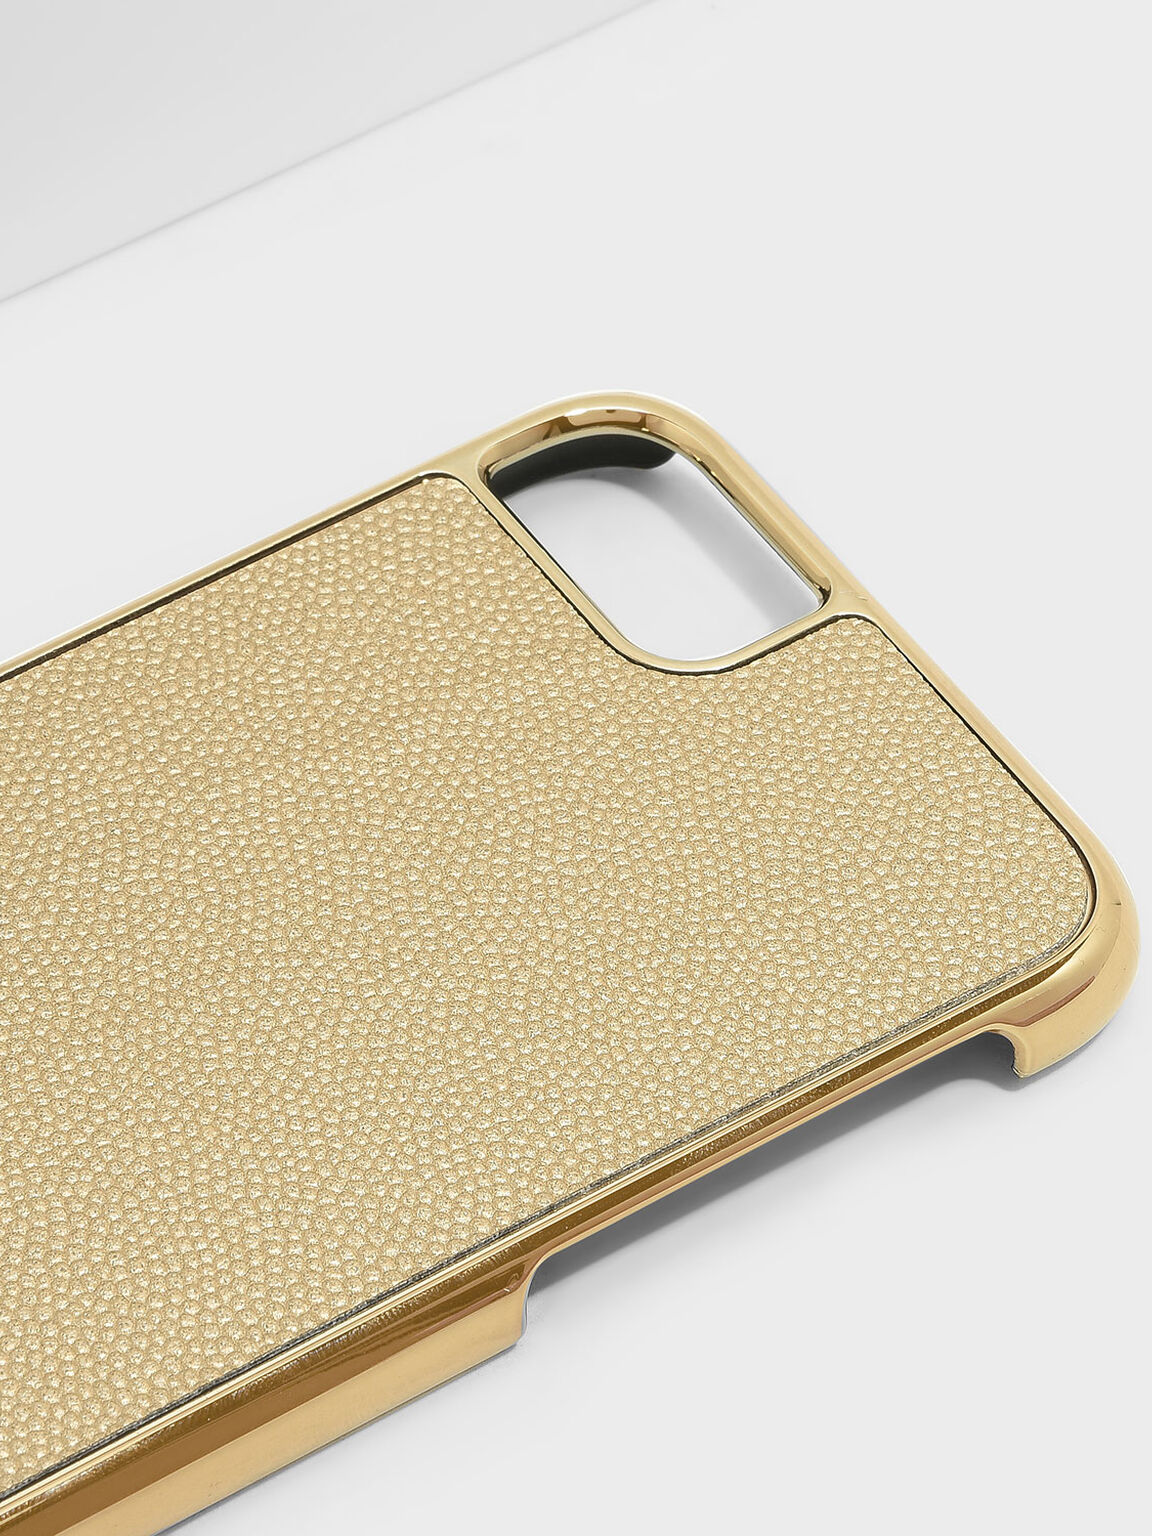 iPhone 7/8 Textured Case, Gold, hi-res